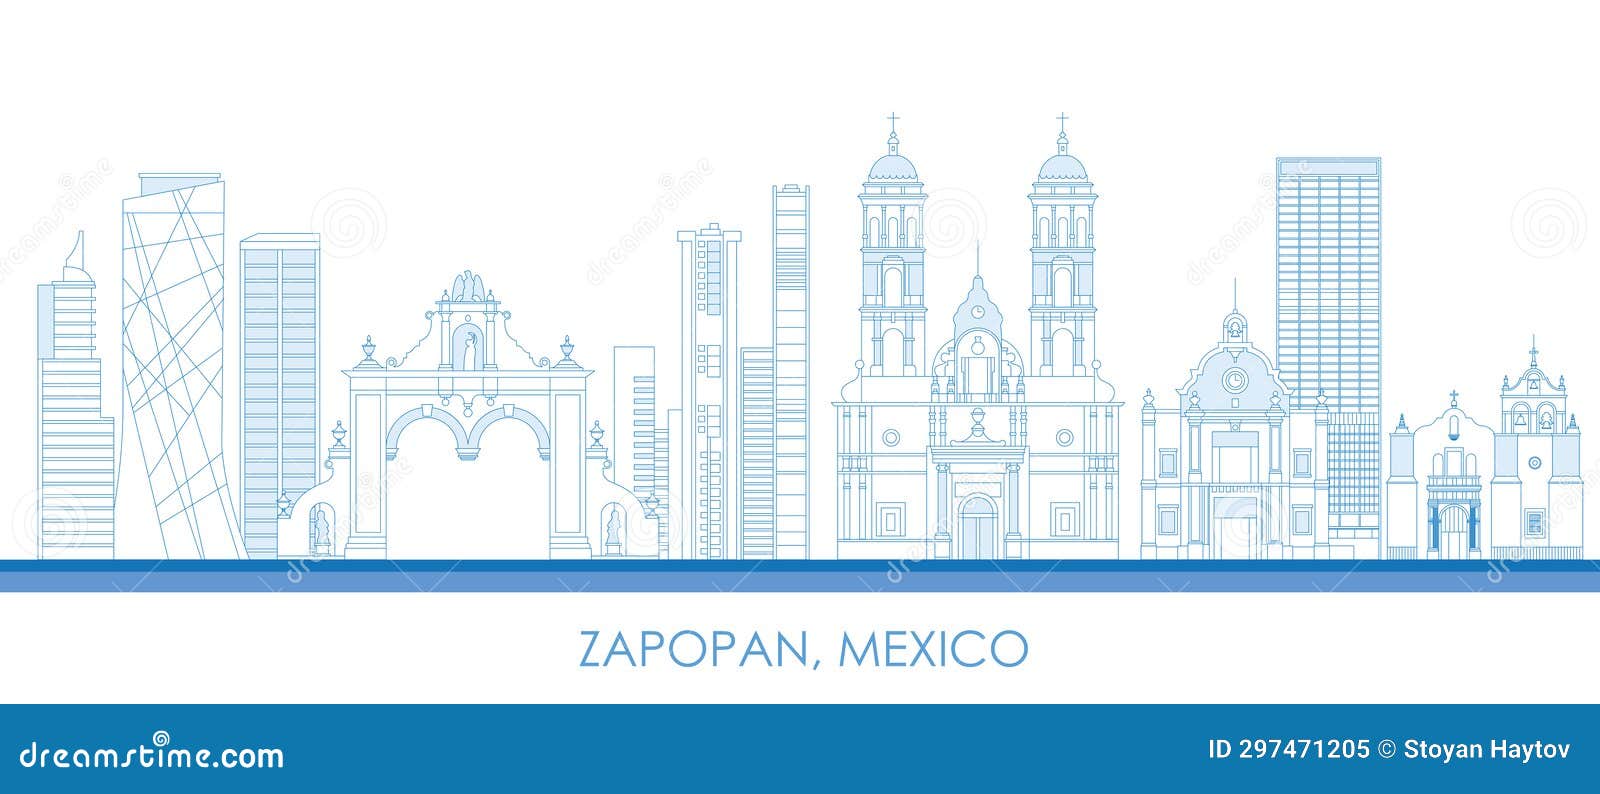 outline skyline panorama of city of zapopan, mexico